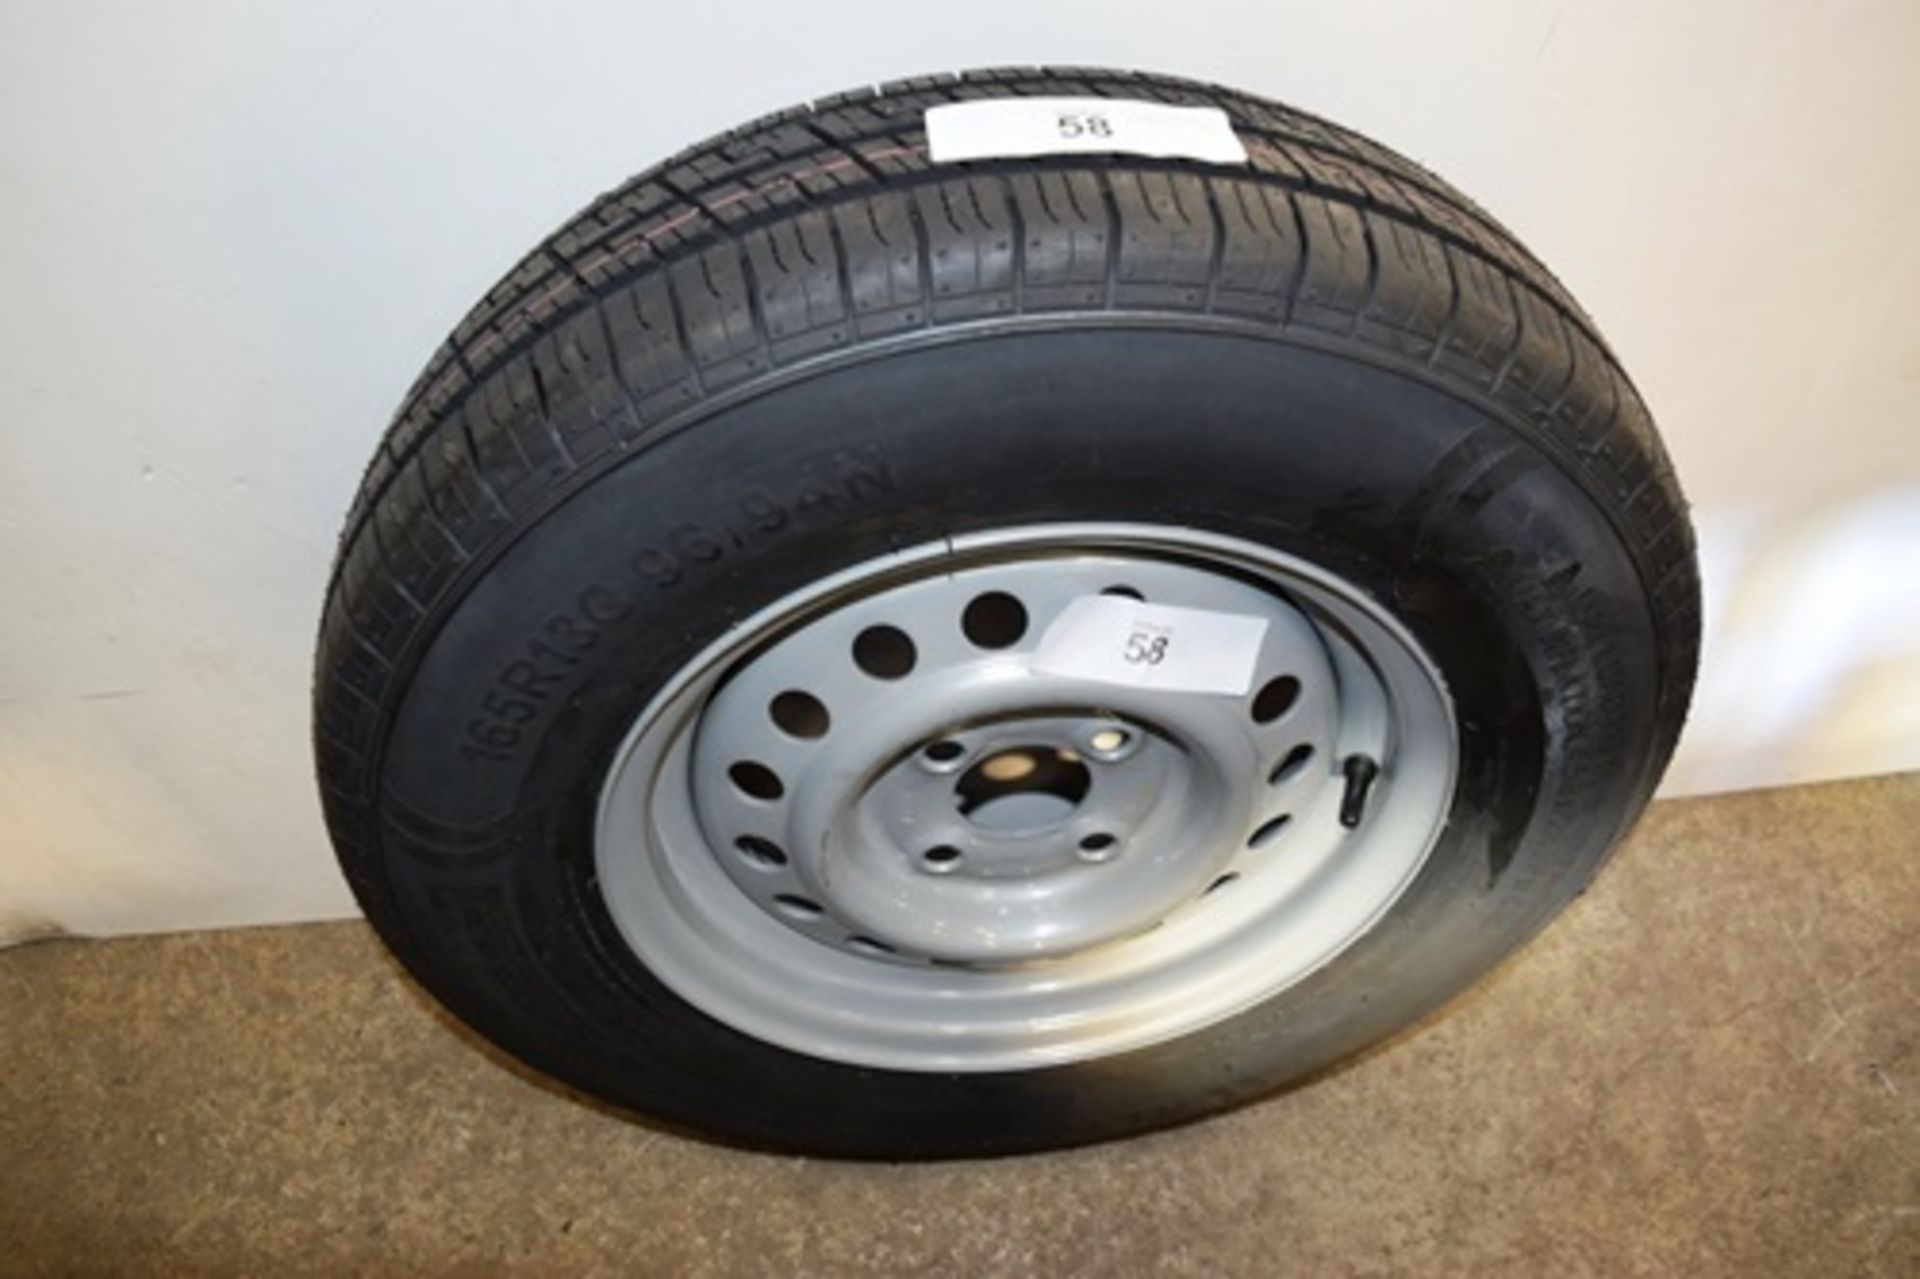 1 x Kenda Mastertrail 3G tyre, size 165R13C 96/94N on steel 4 stud rim - New (GS7) - Image 2 of 2